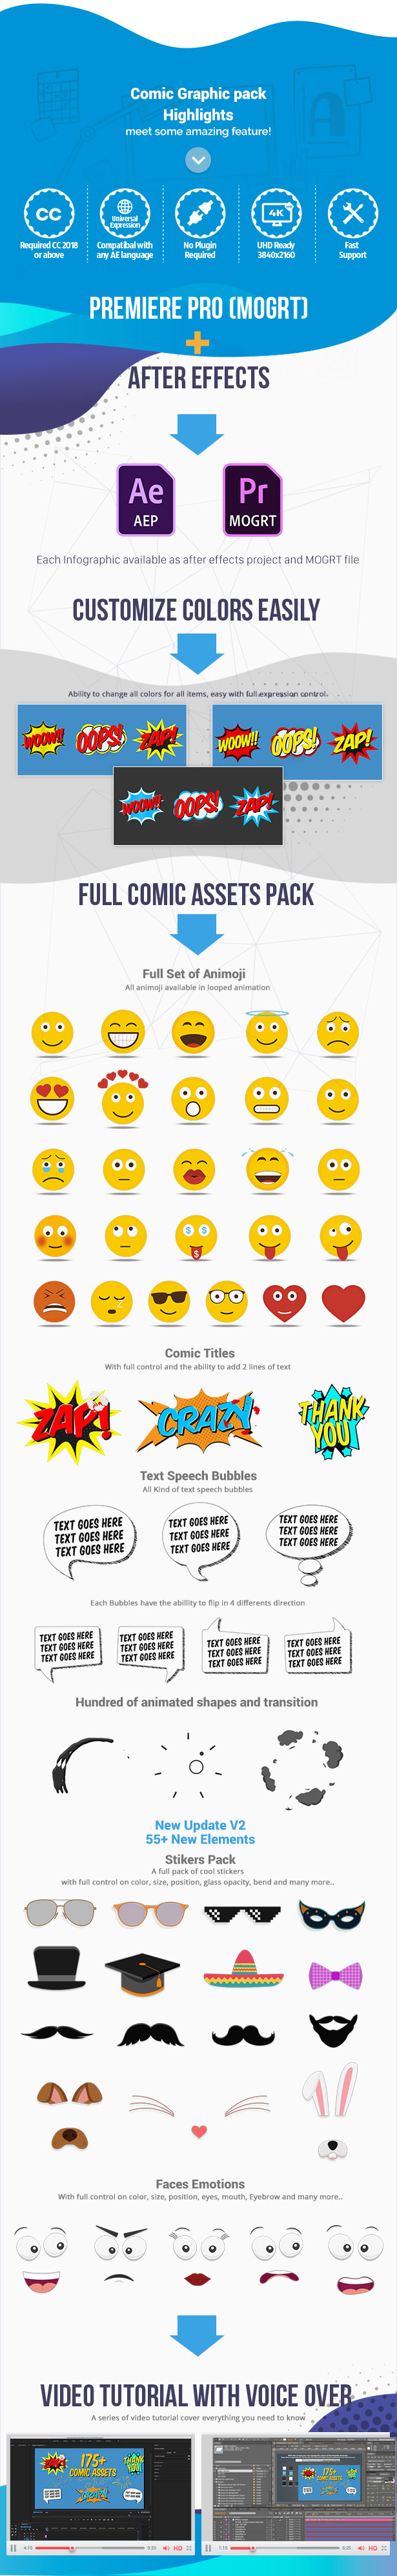  Comic Titles - Speech Bubbles - Emoji - Stickers - Flash FX Graphic Pack 